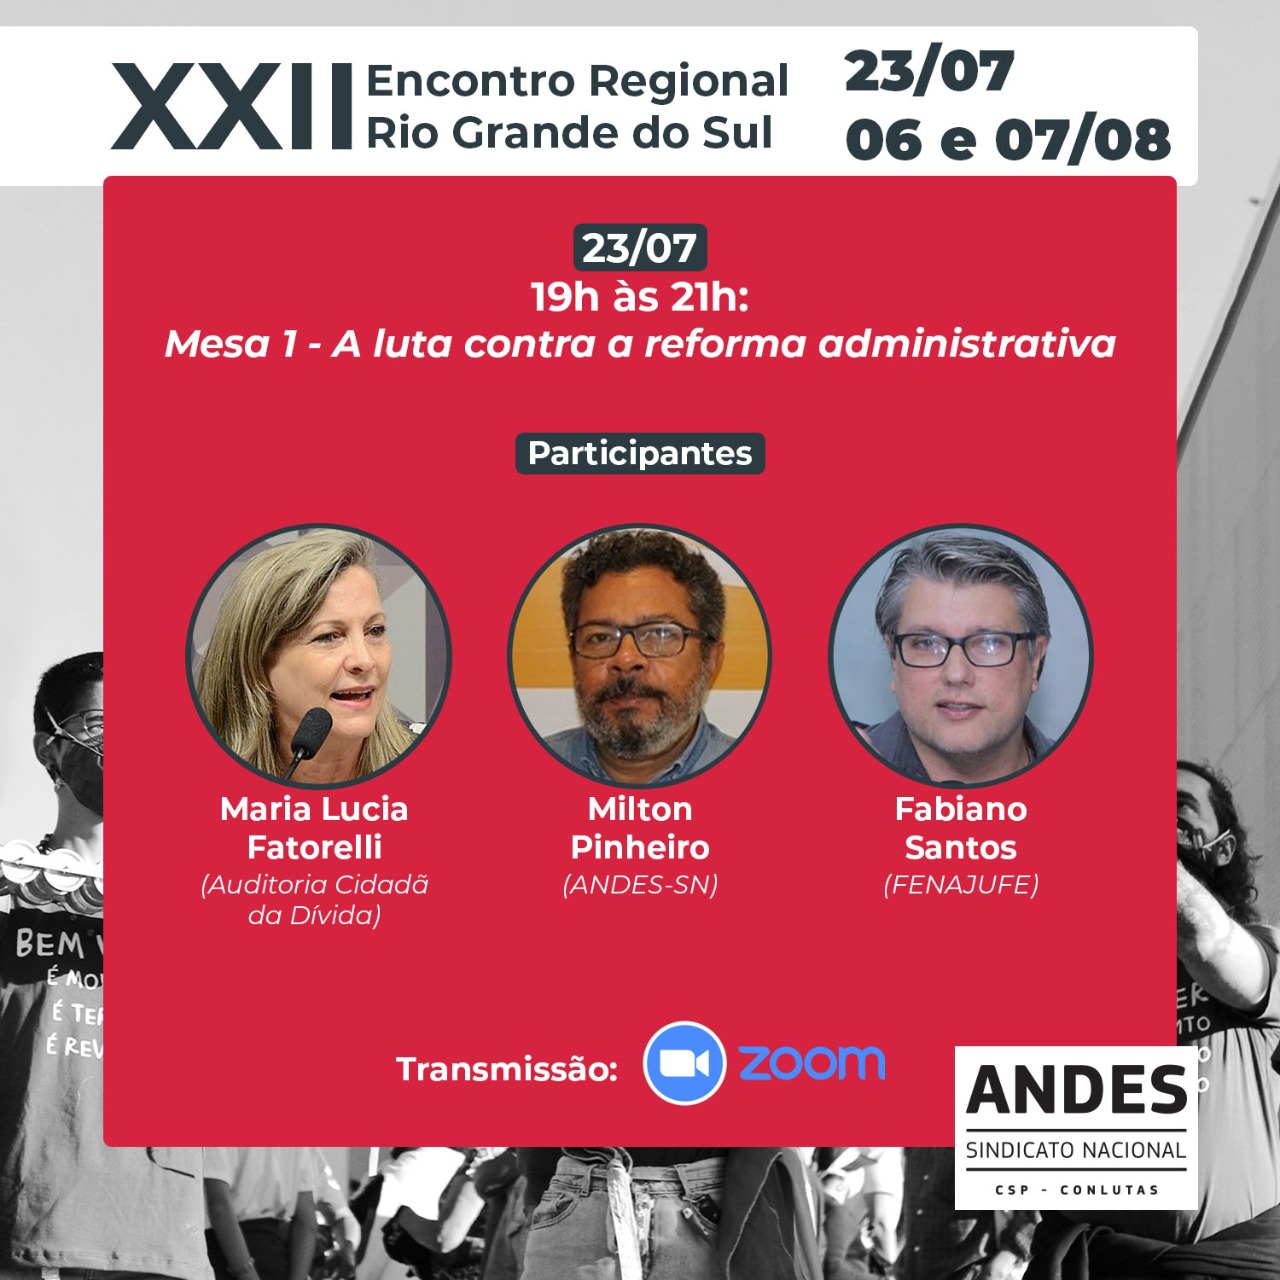 A luta contra a reforma administrativa – XXII Encontro Regional Rio Grande do Sul – Andes Sindicato Nacional